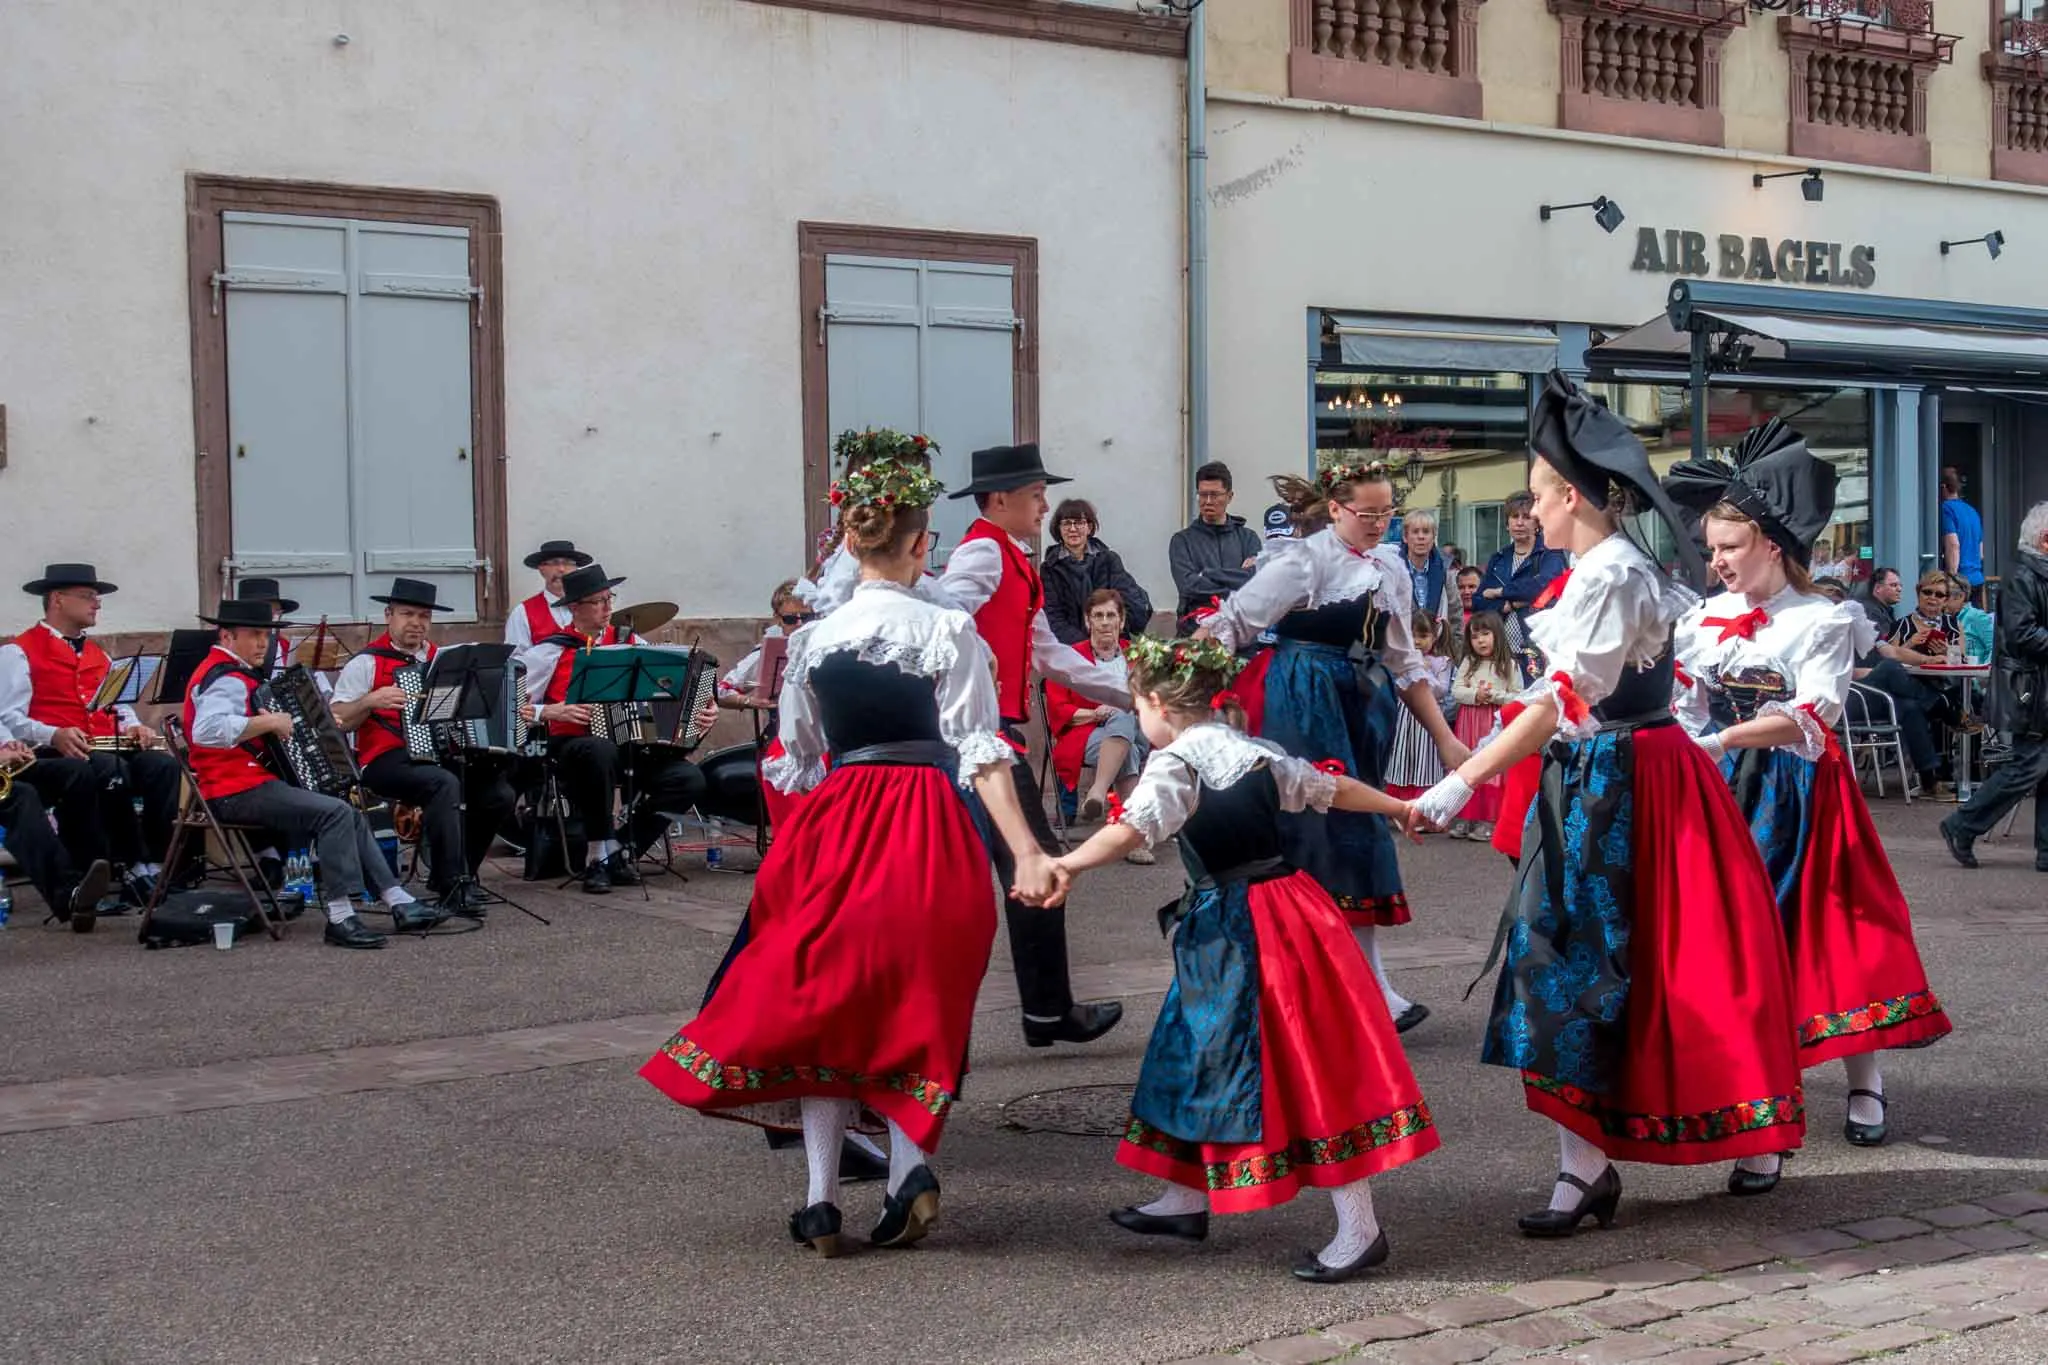 People dancing in traditional Alsatian clothing